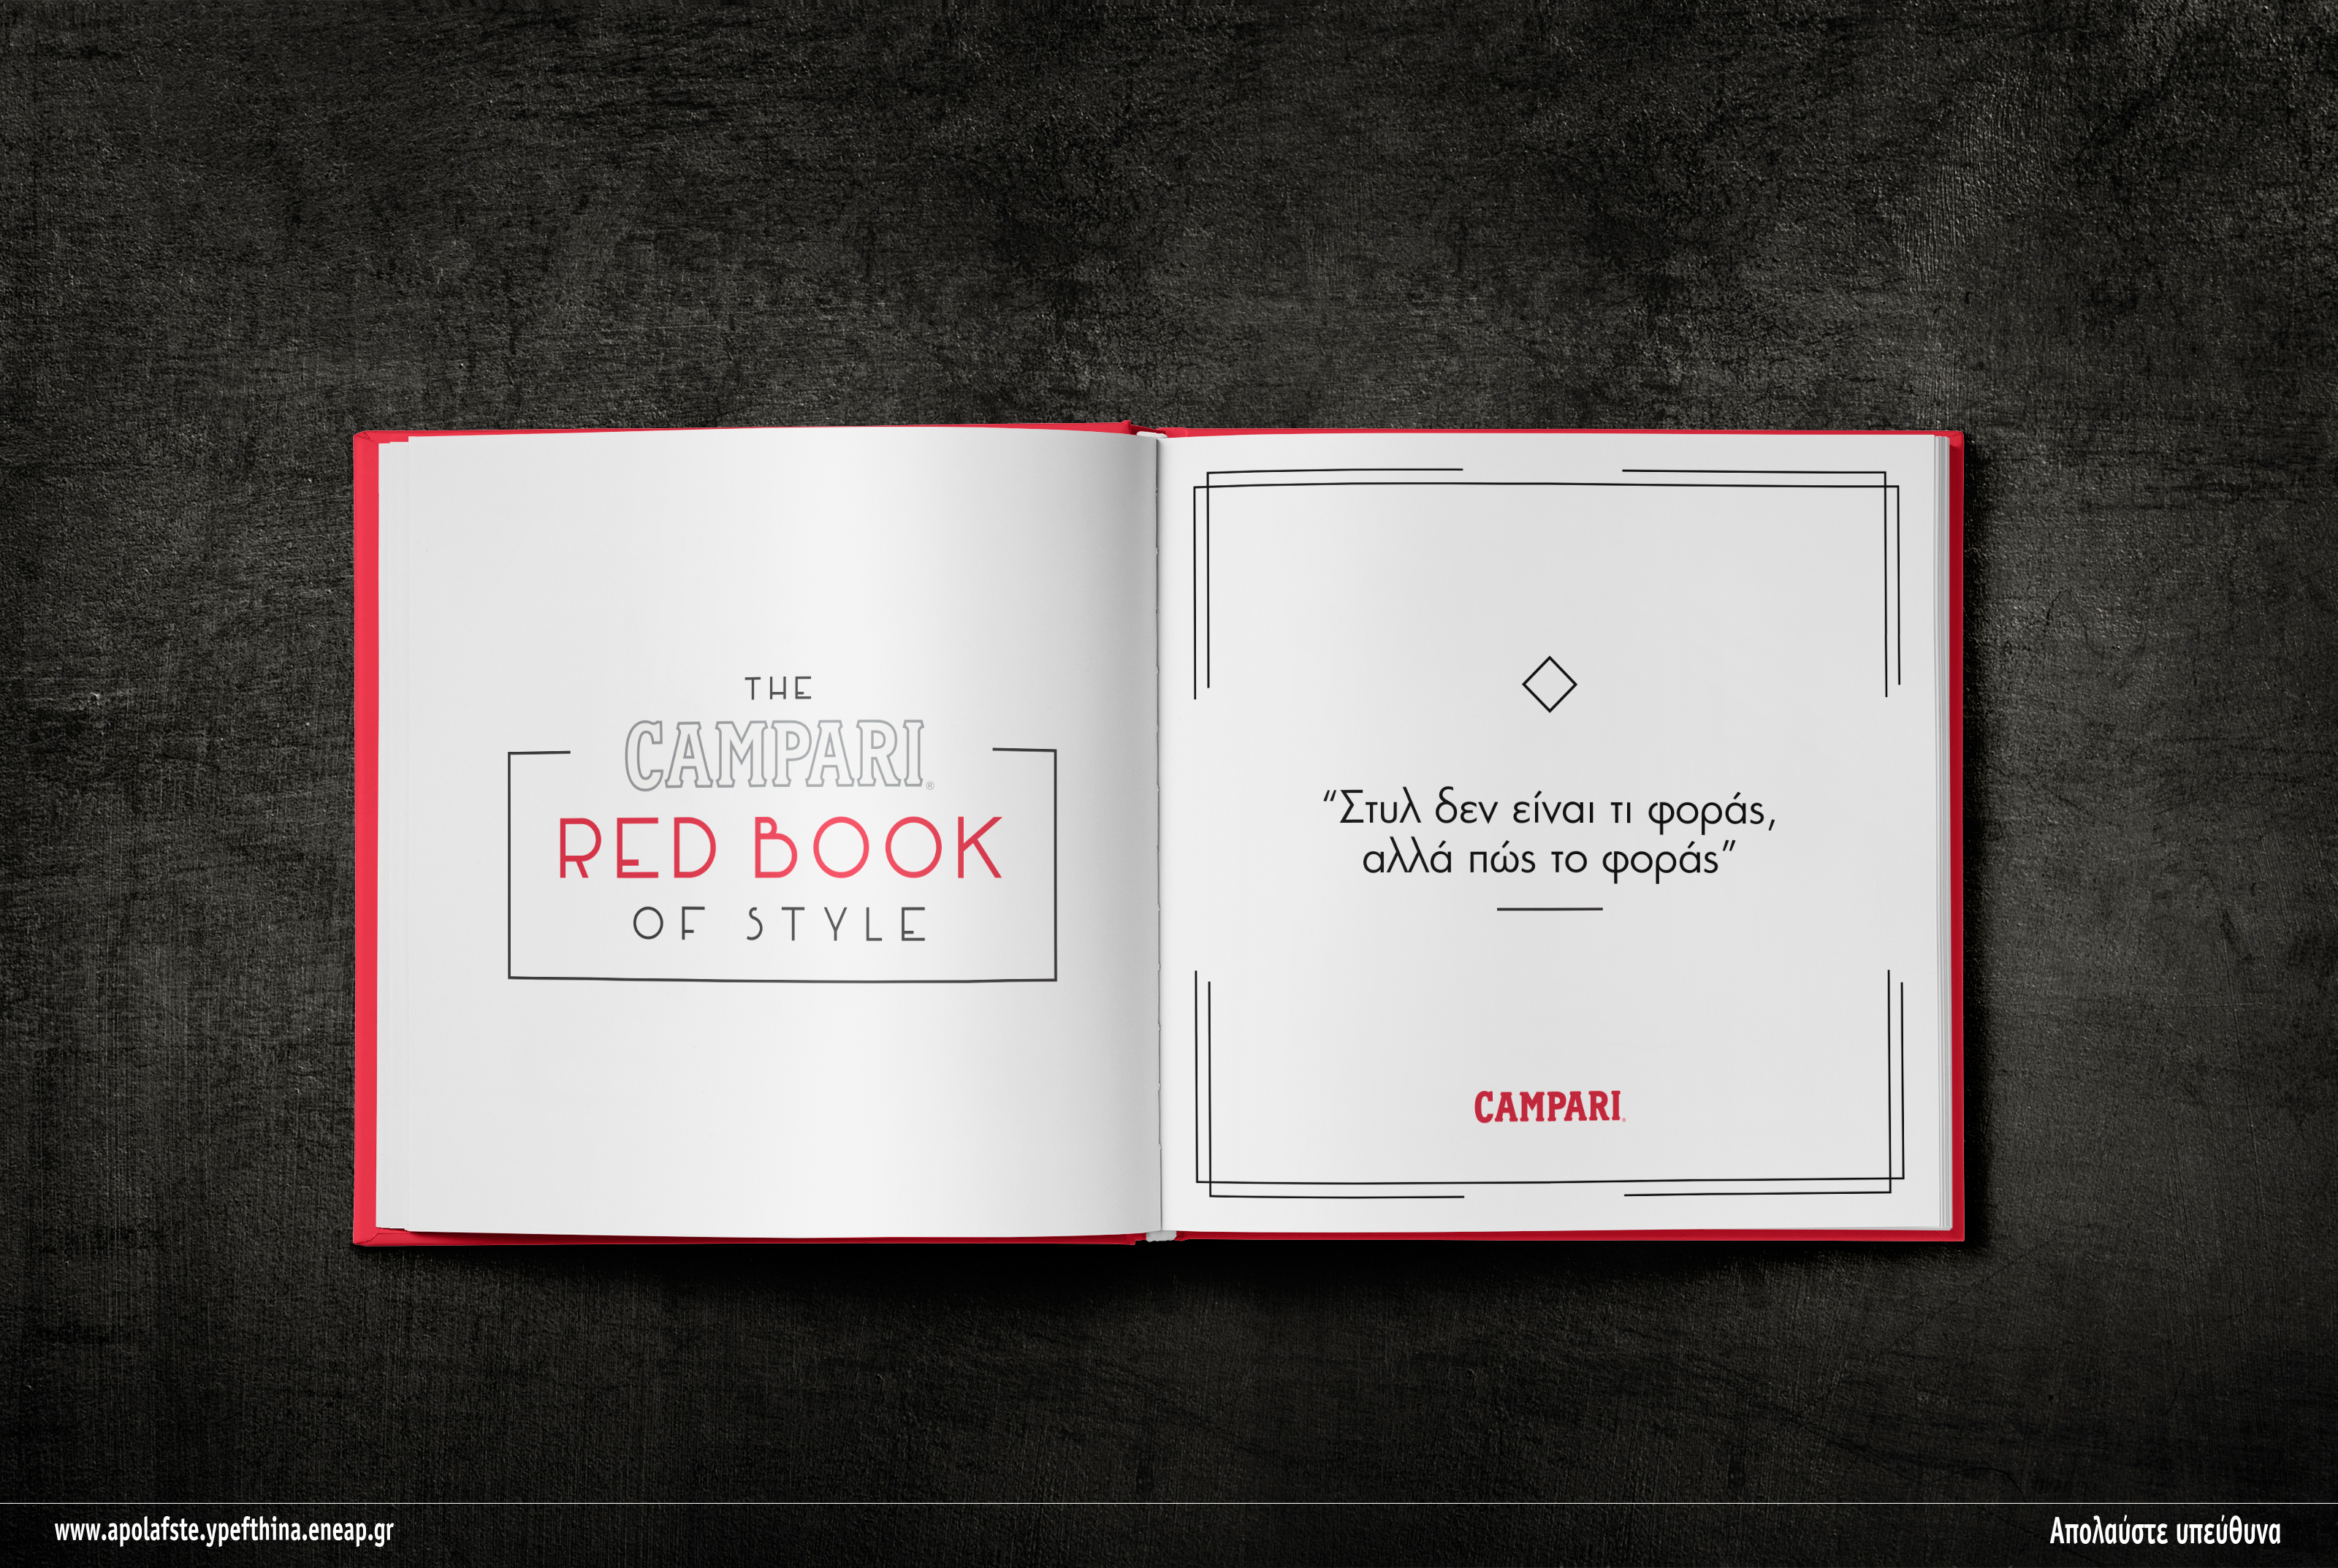  Campari Red Book Of Style